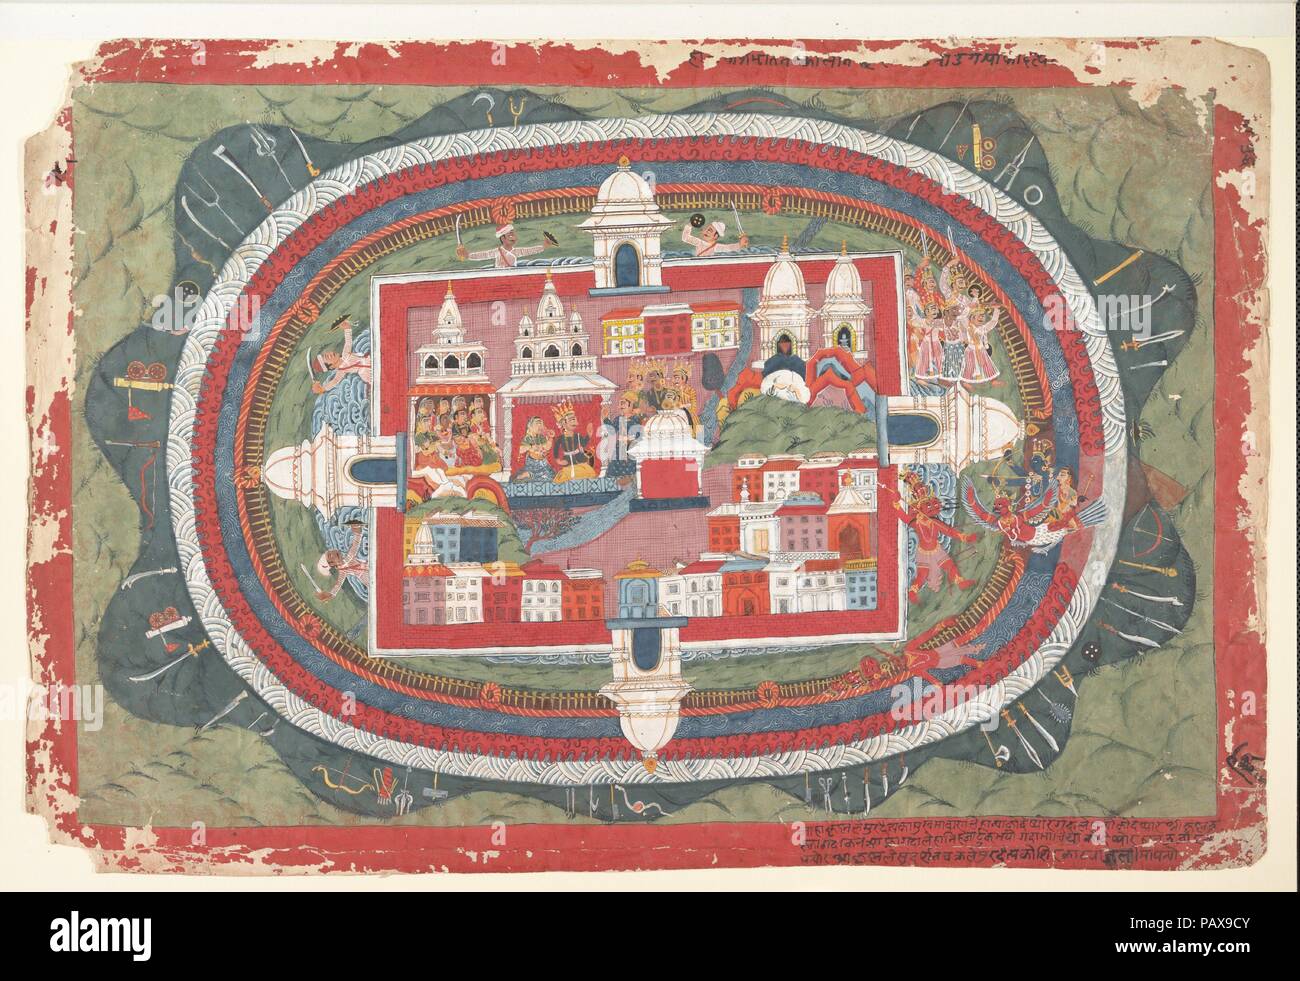 Page from a Dispersed Bhagavata Purana Manuscript (Life of Krishna). Culture: Nepal (Kathmandu Valley). Dimensions: 14 3/4 x 22 in. (37.5 x 55.9 cm). Date: ca. 1775. Museum: Metropolitan Museum of Art, New York, USA. Stock Photo